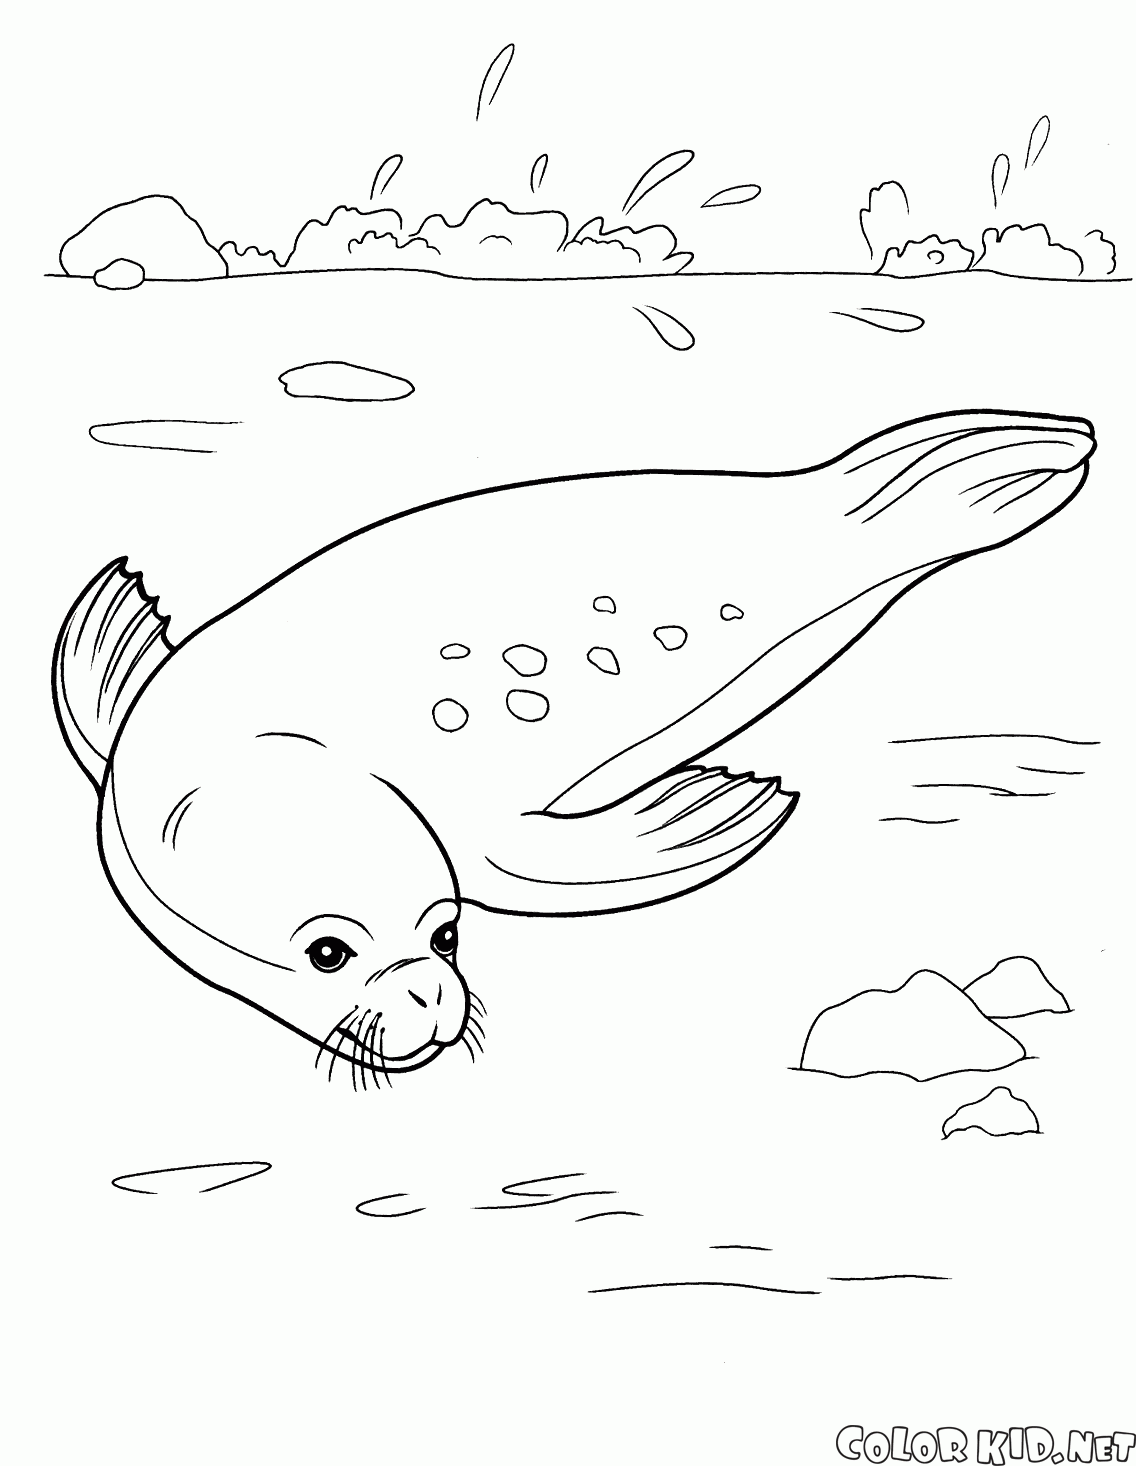 Seal rahatlatıcı